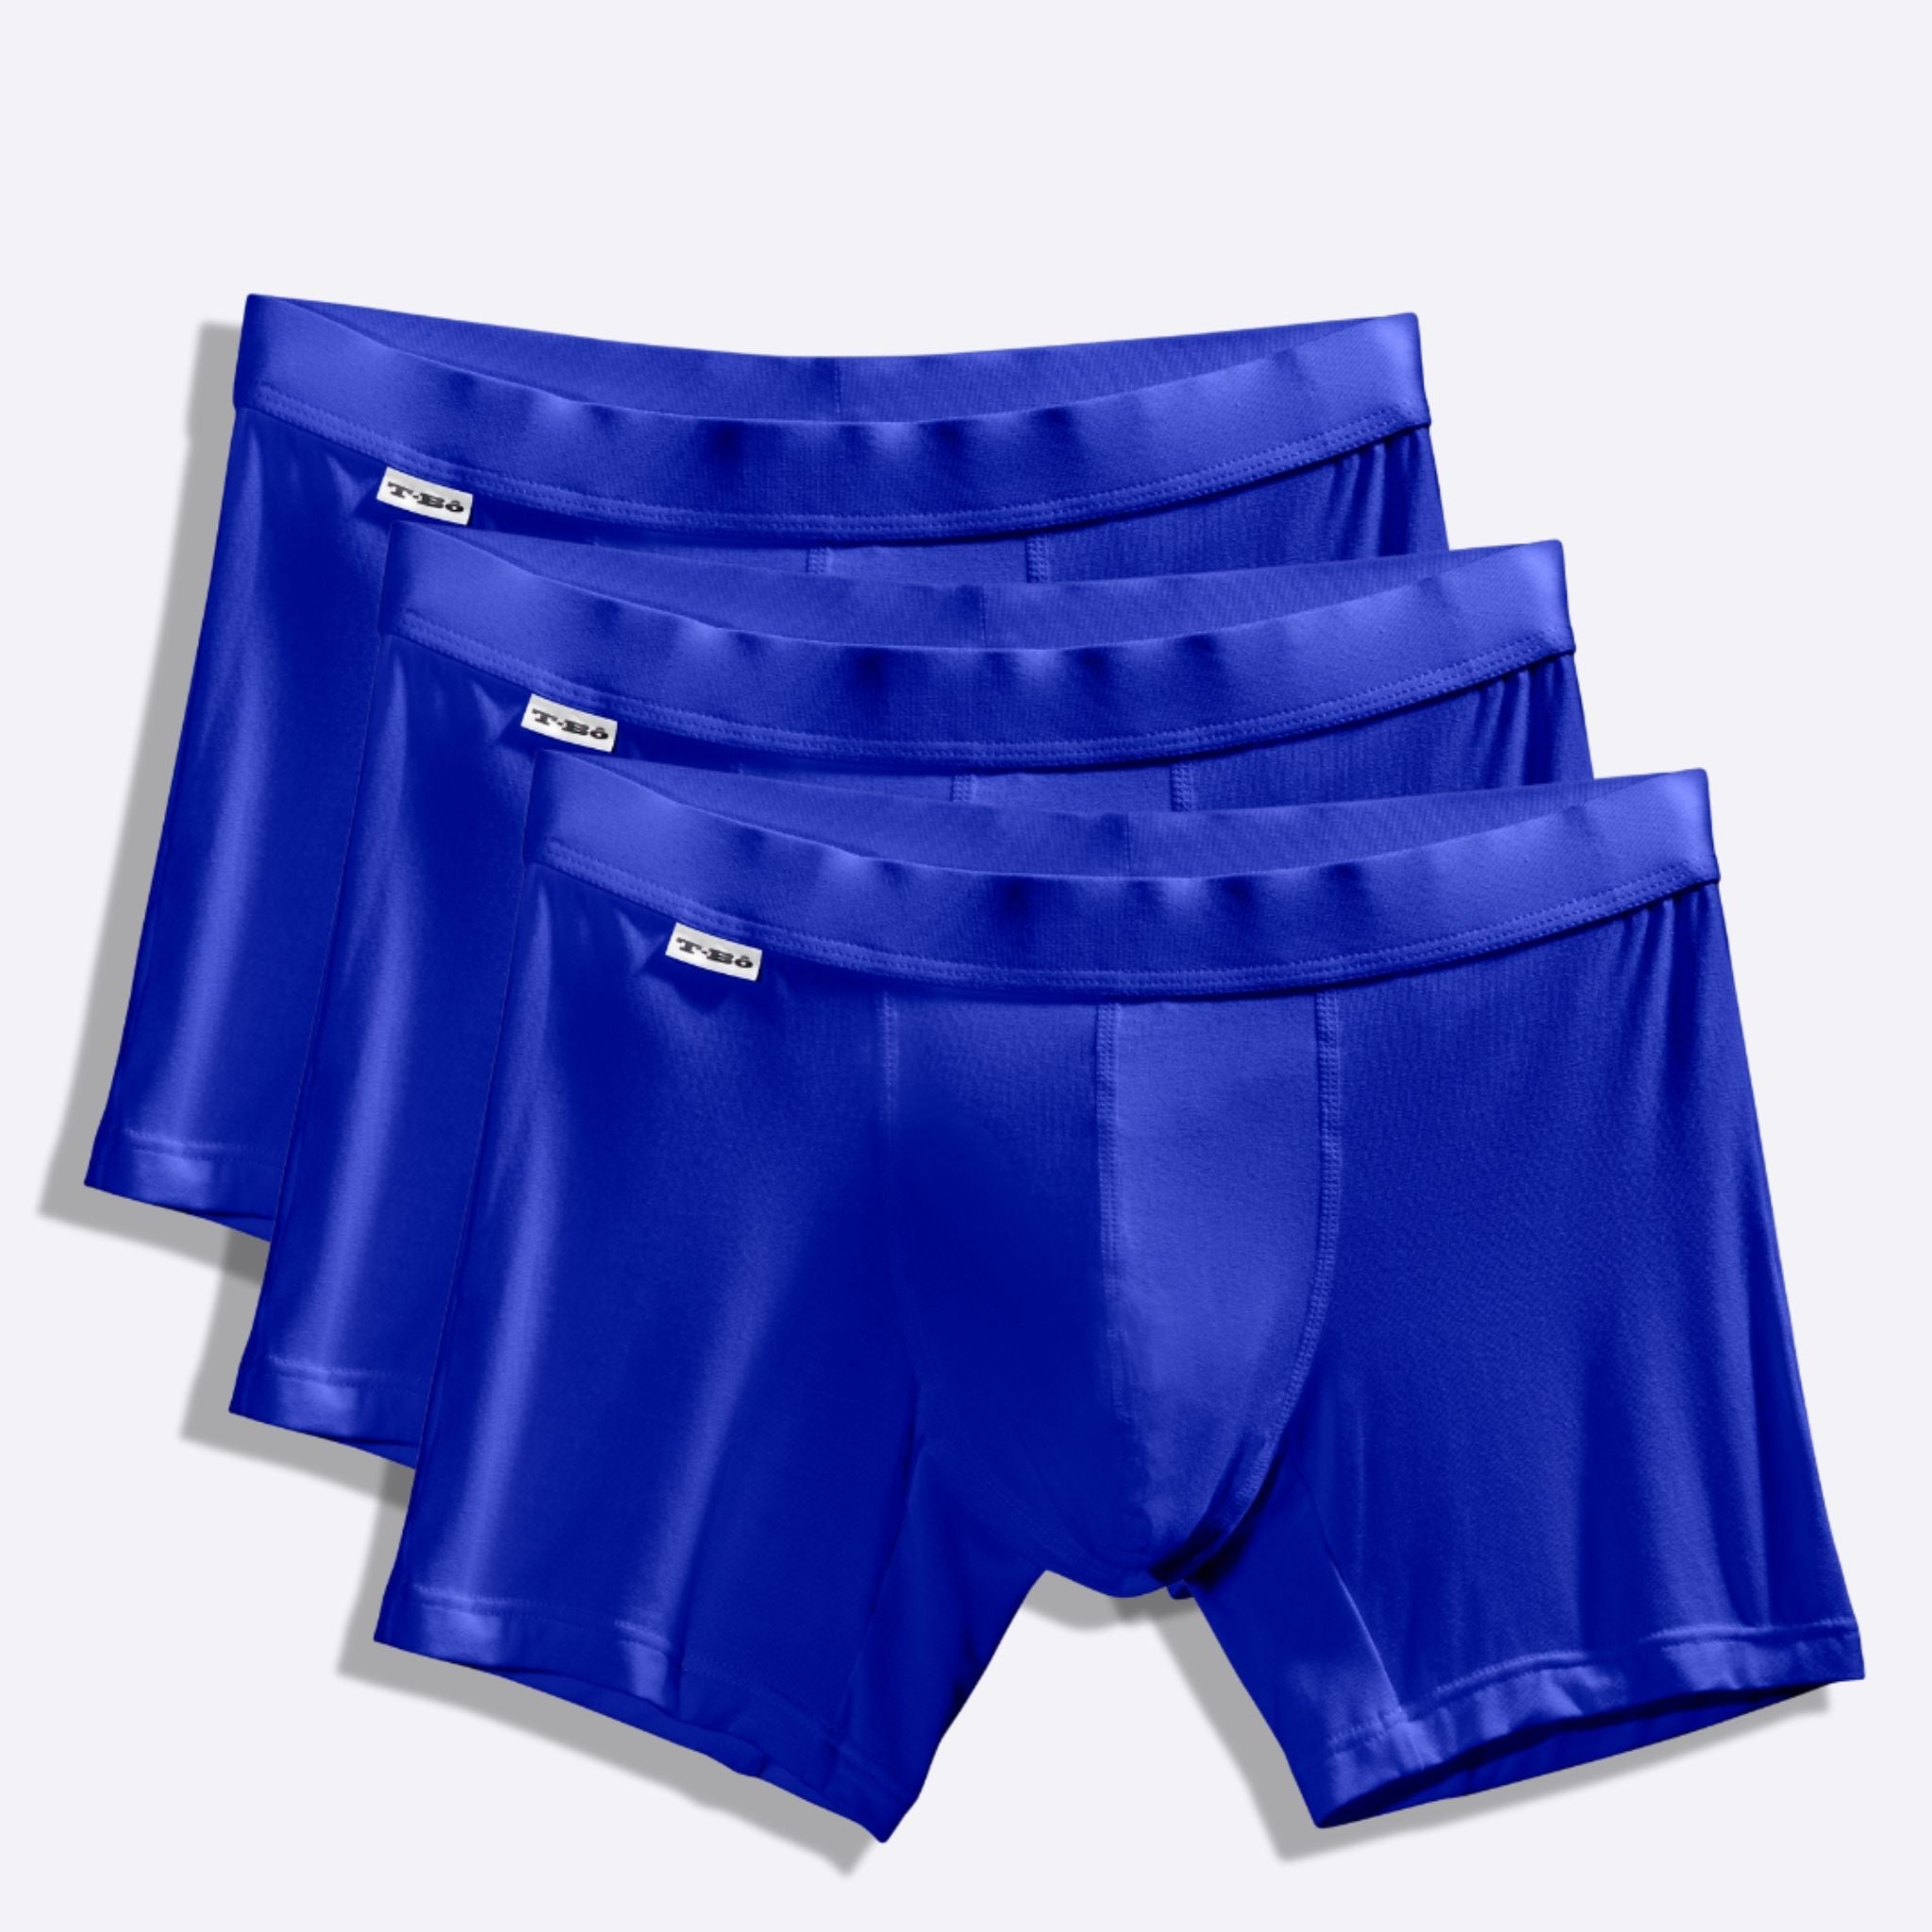 TBô Surf the Web Blue Boxer Brief 3-Pack - TBô underwear